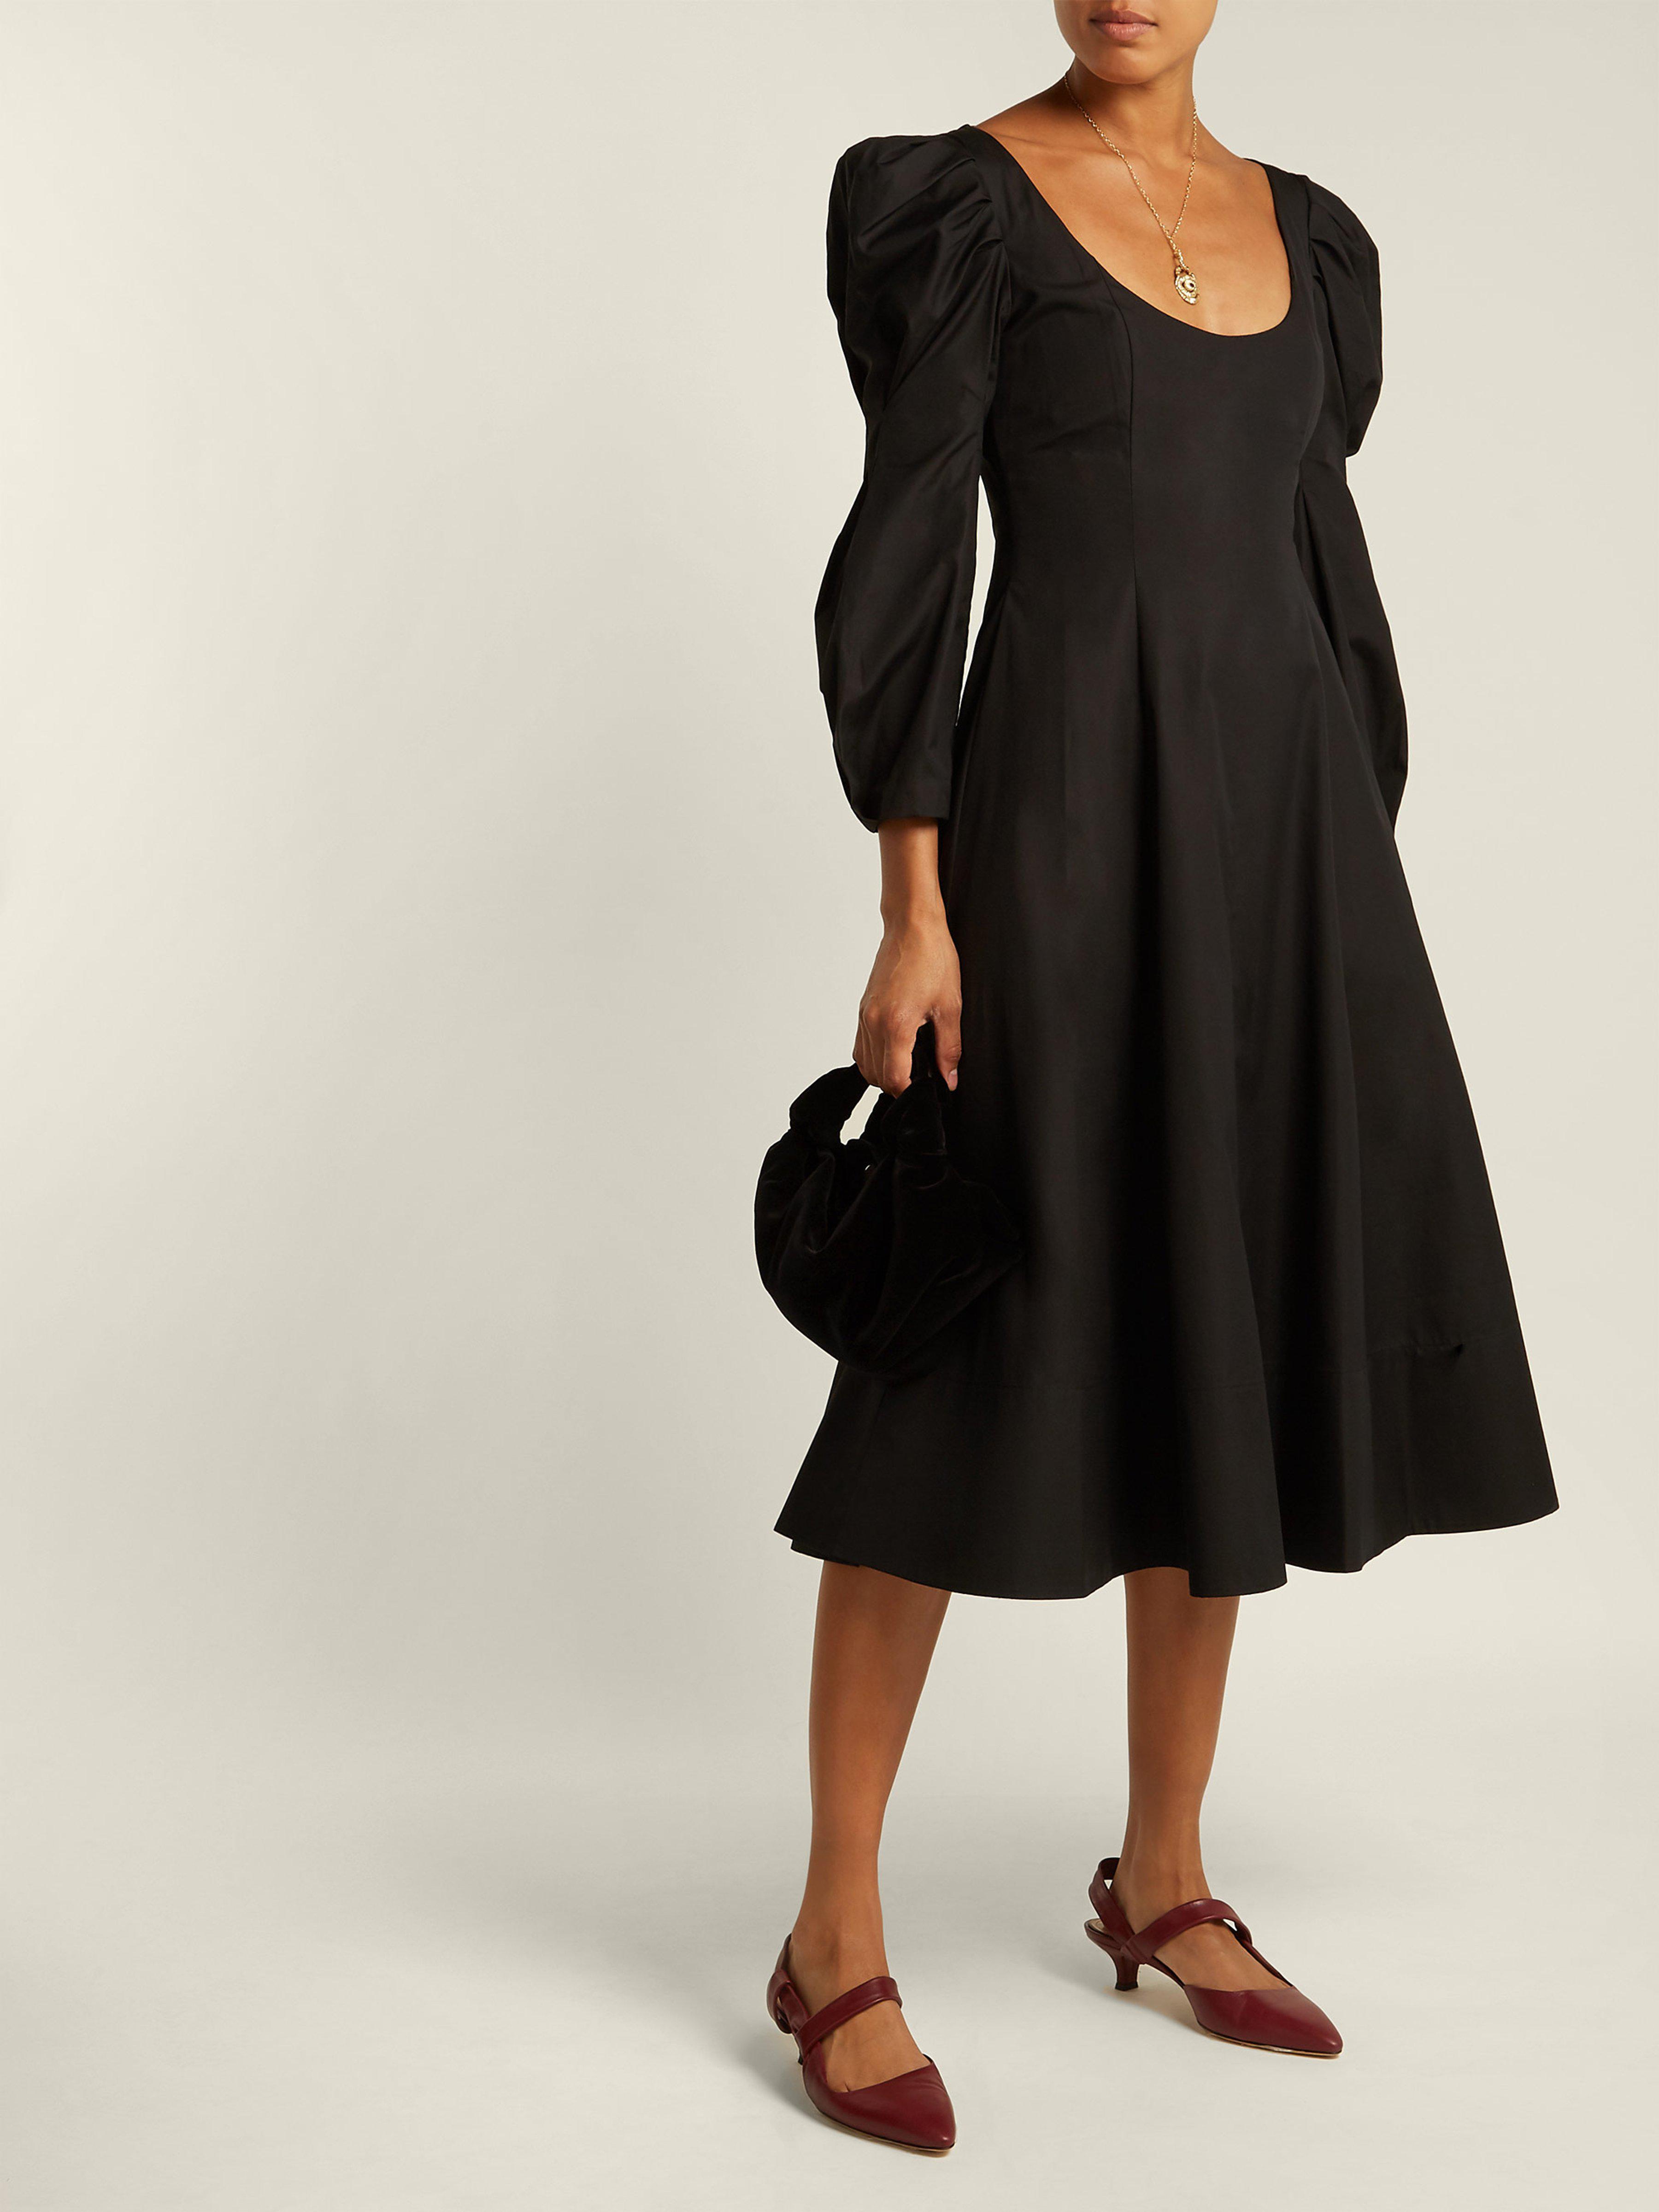 Khaite Edwina Bodice Cotton Dress in Black - Lyst